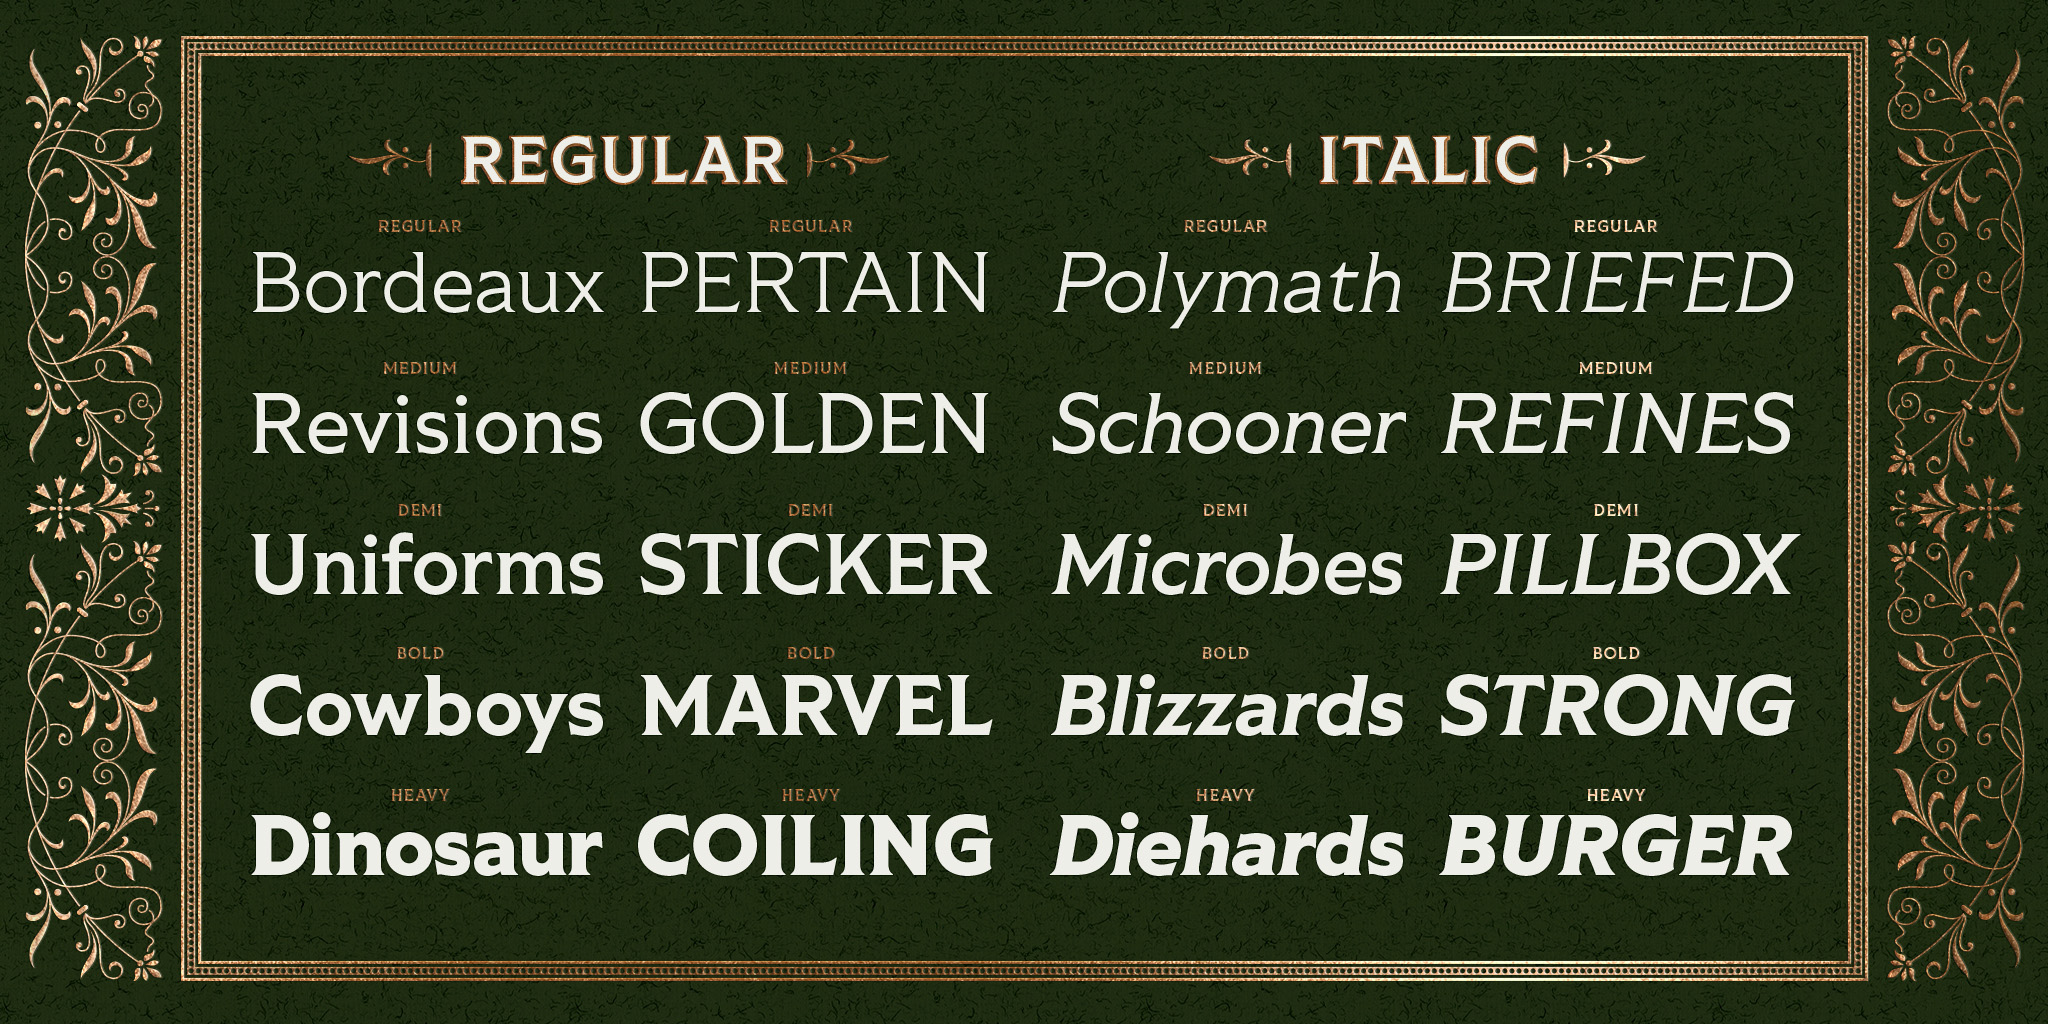 Card displaying Tiller typeface in various styles